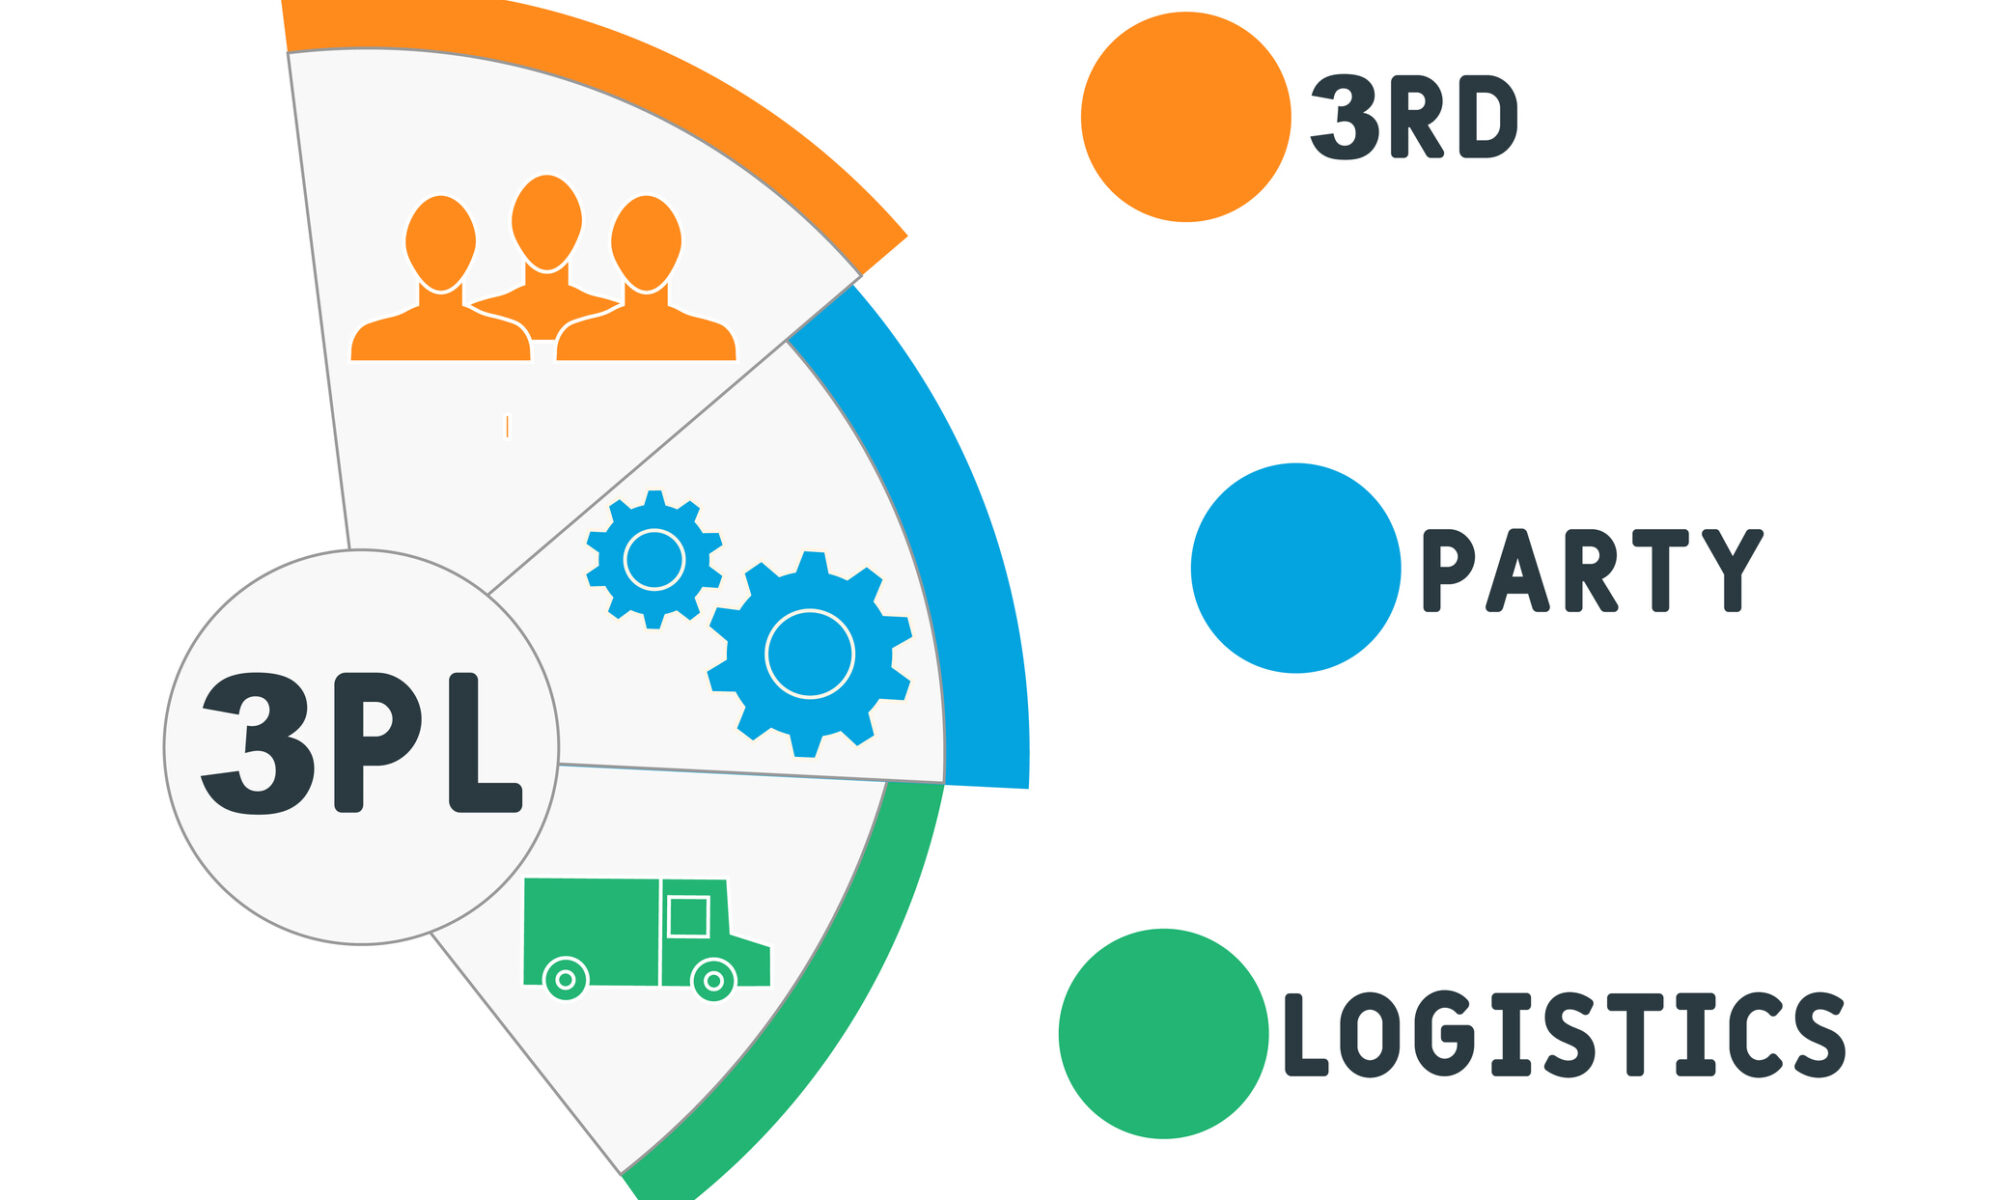 3PL - Third Party Logistics Diagram